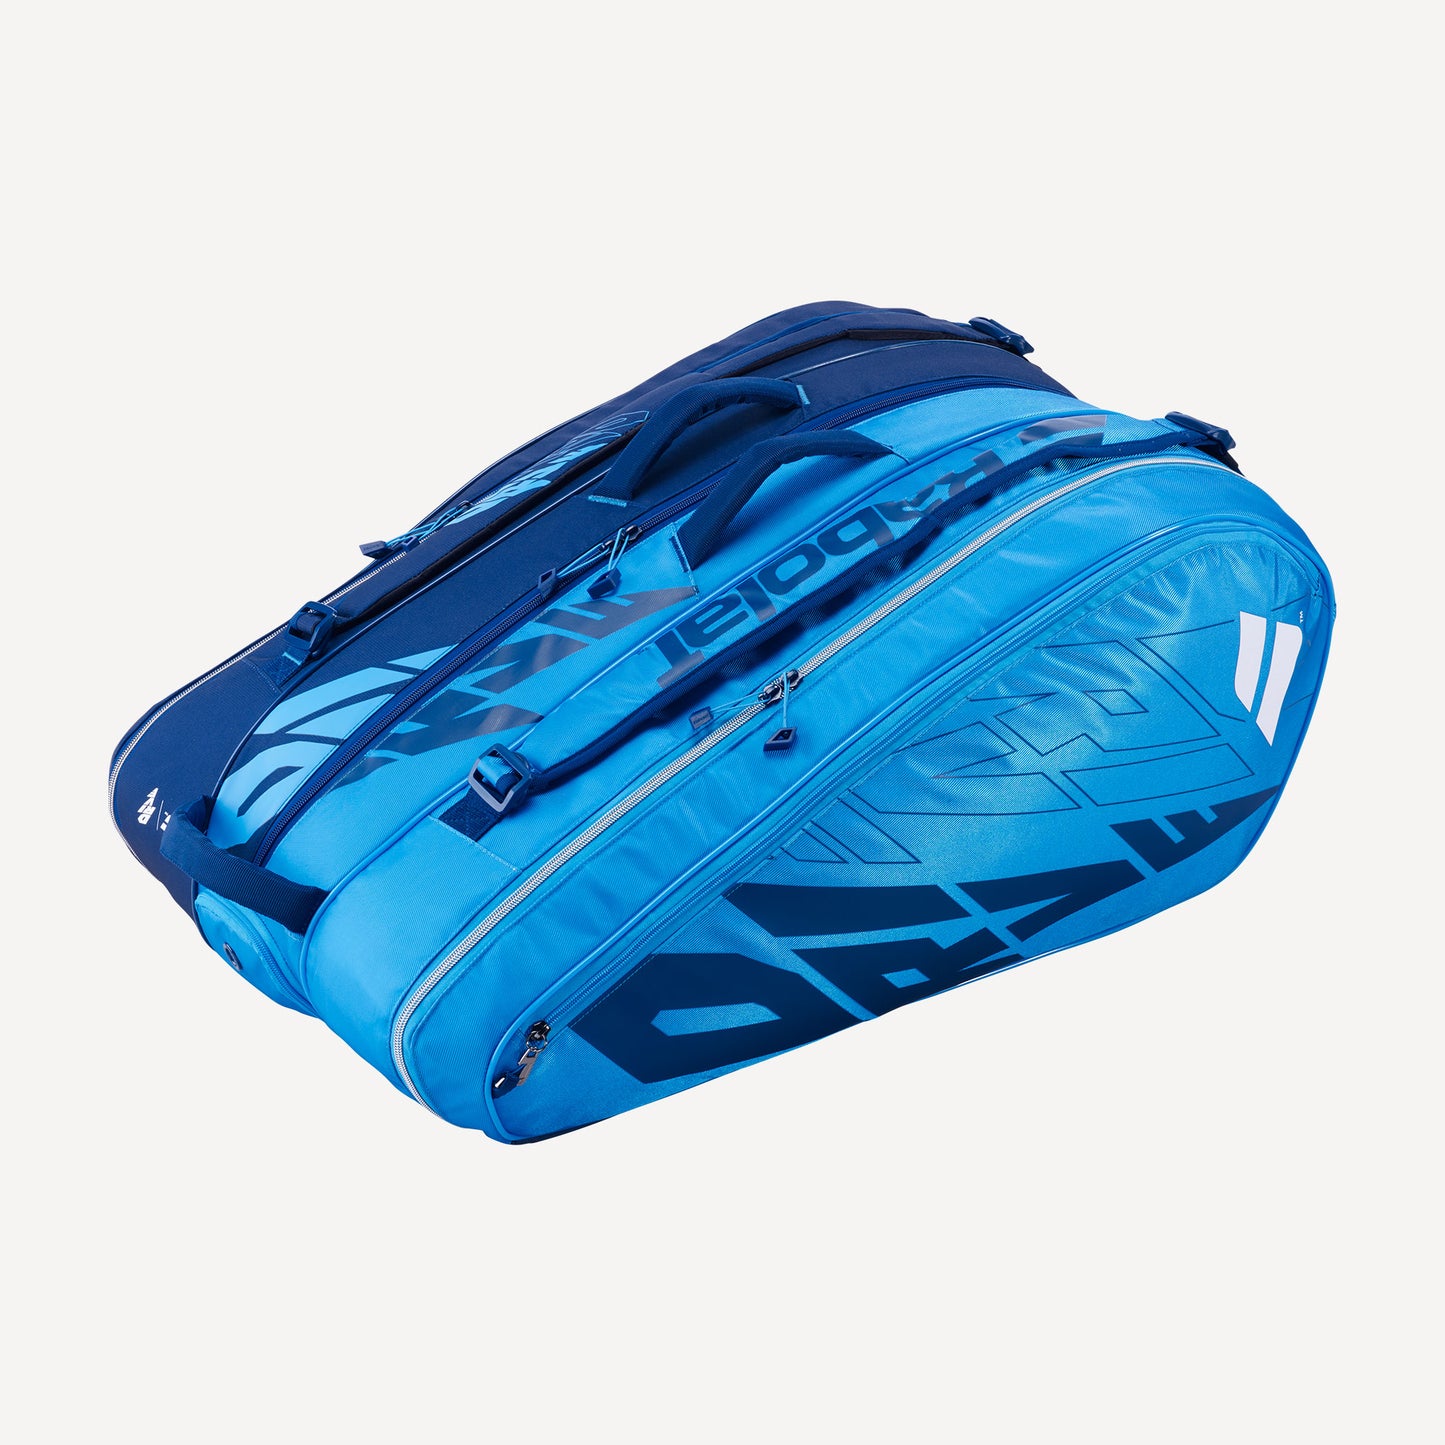 Babolat Pure Drive RH X12 Tennis Bag Blue (2)